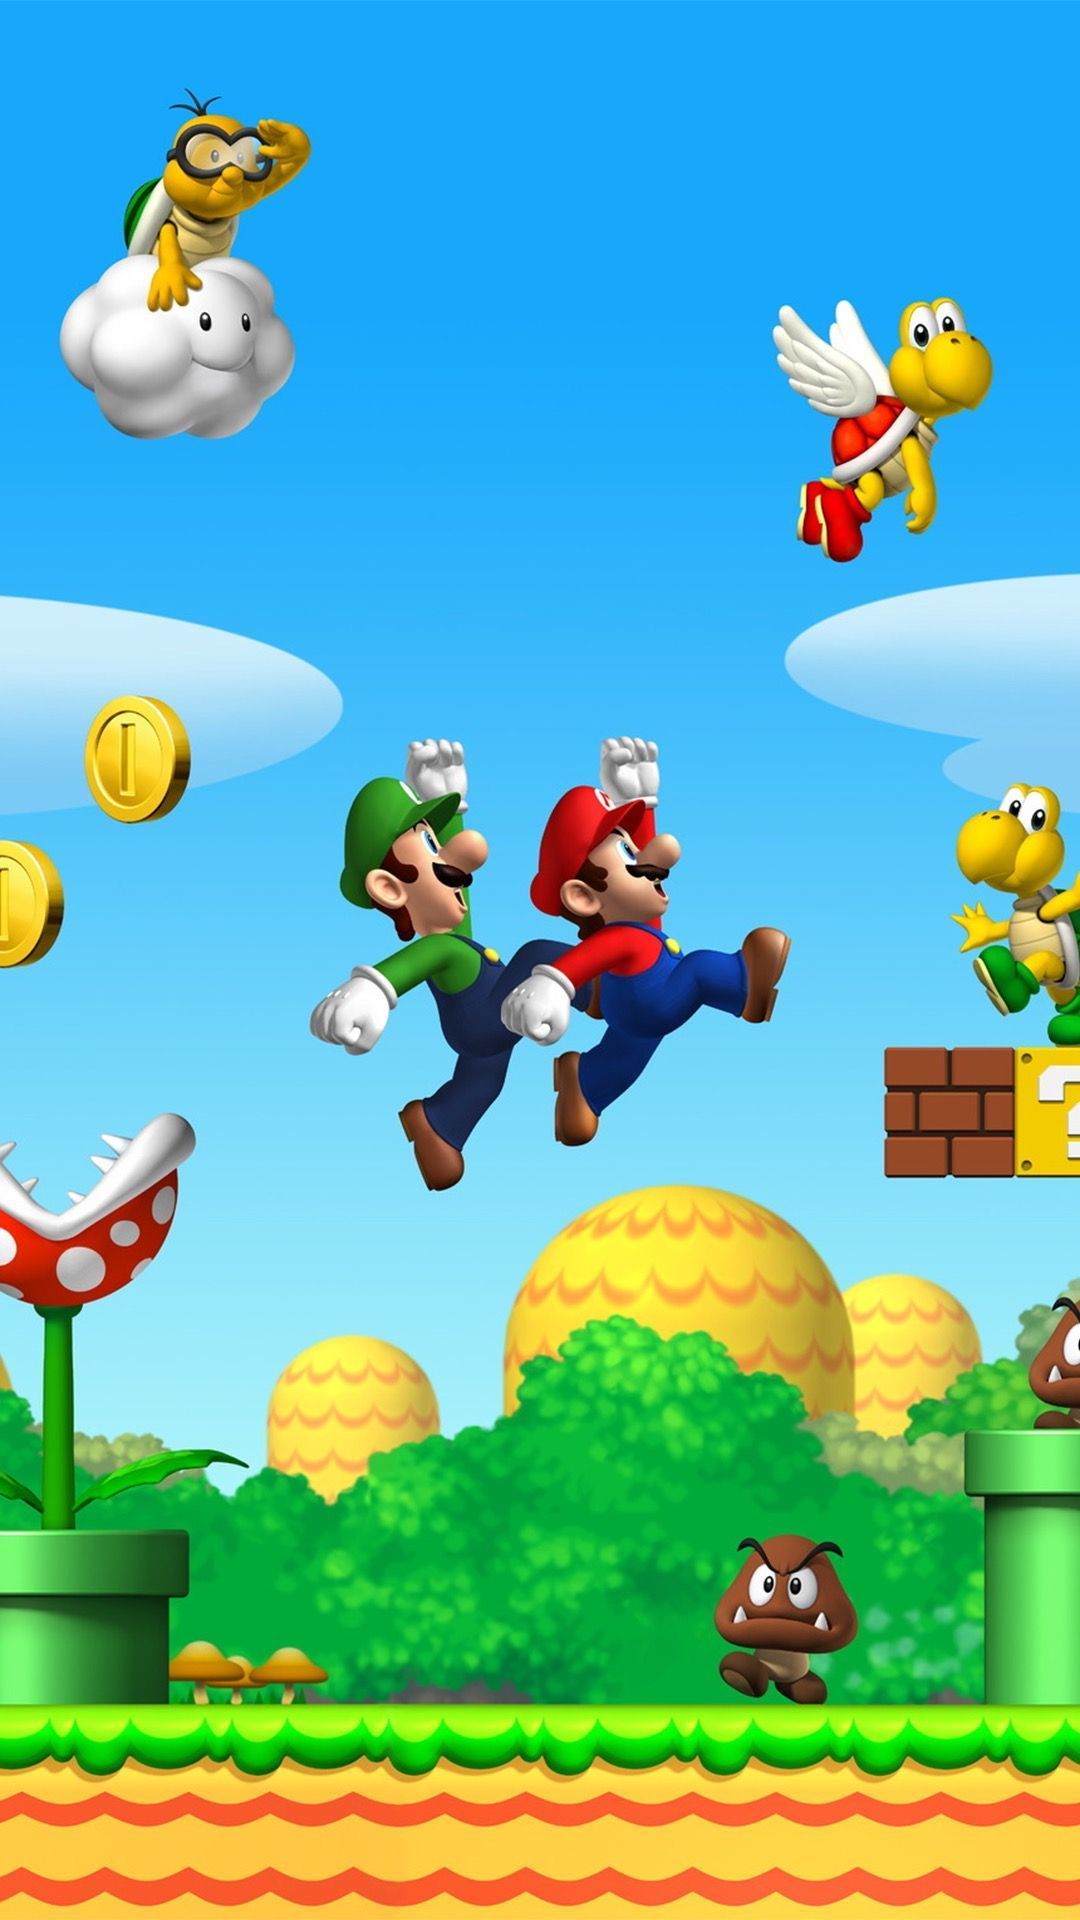 Bit Mario iPhone Background Games Wallpaper Ideas in 2020